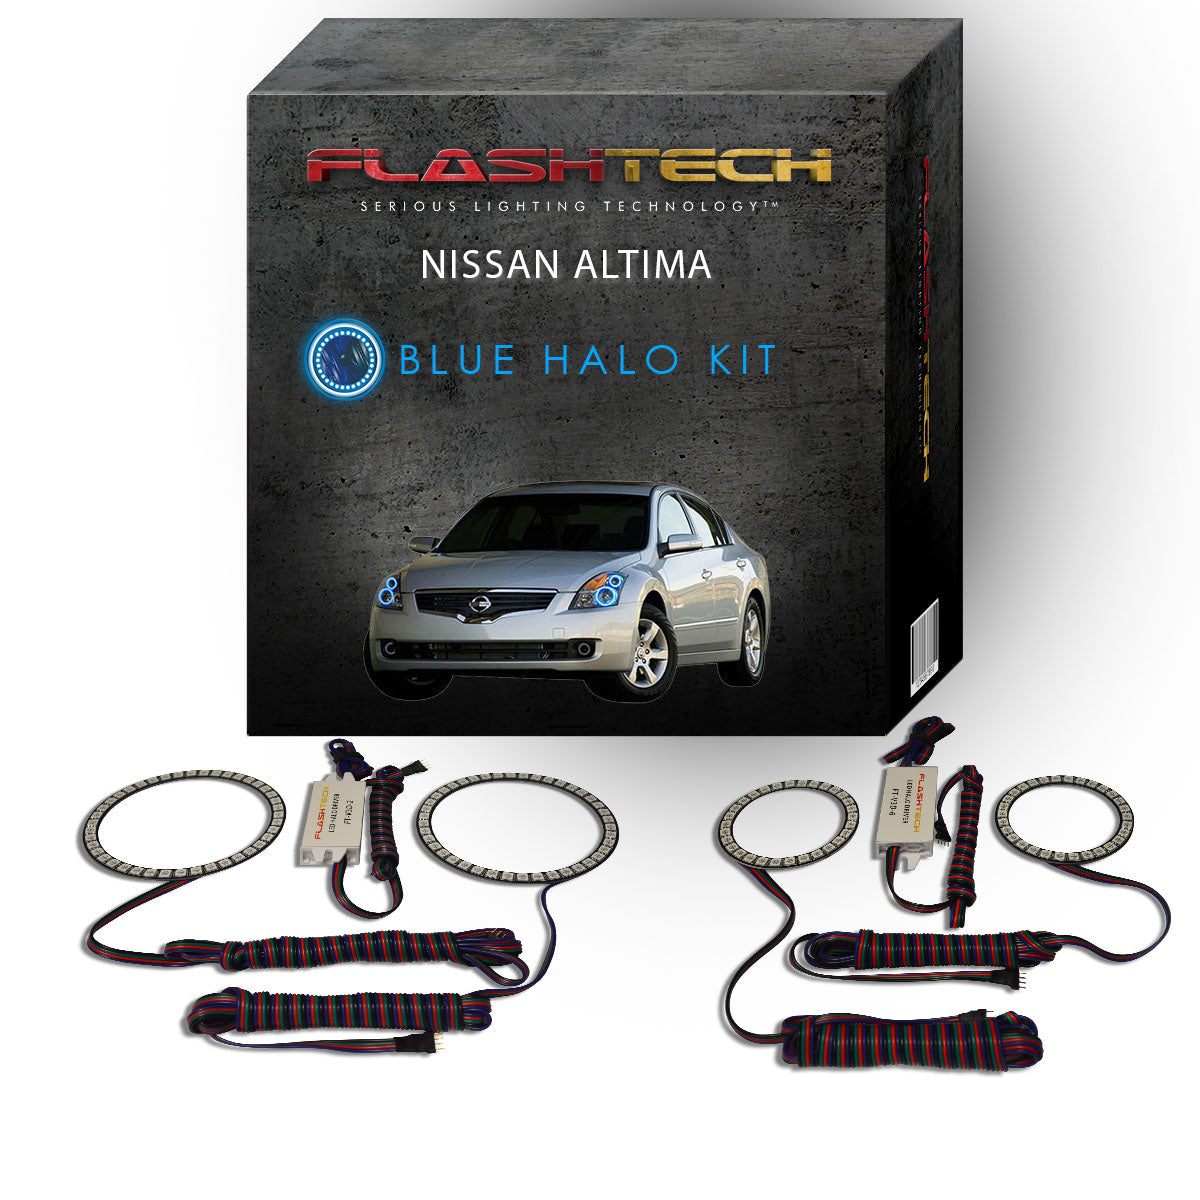 Nissan-Altima-2007, 2008, 2009-LED-Halo-Headlights-RGB-No Remote-NI-ALS0709-V3H